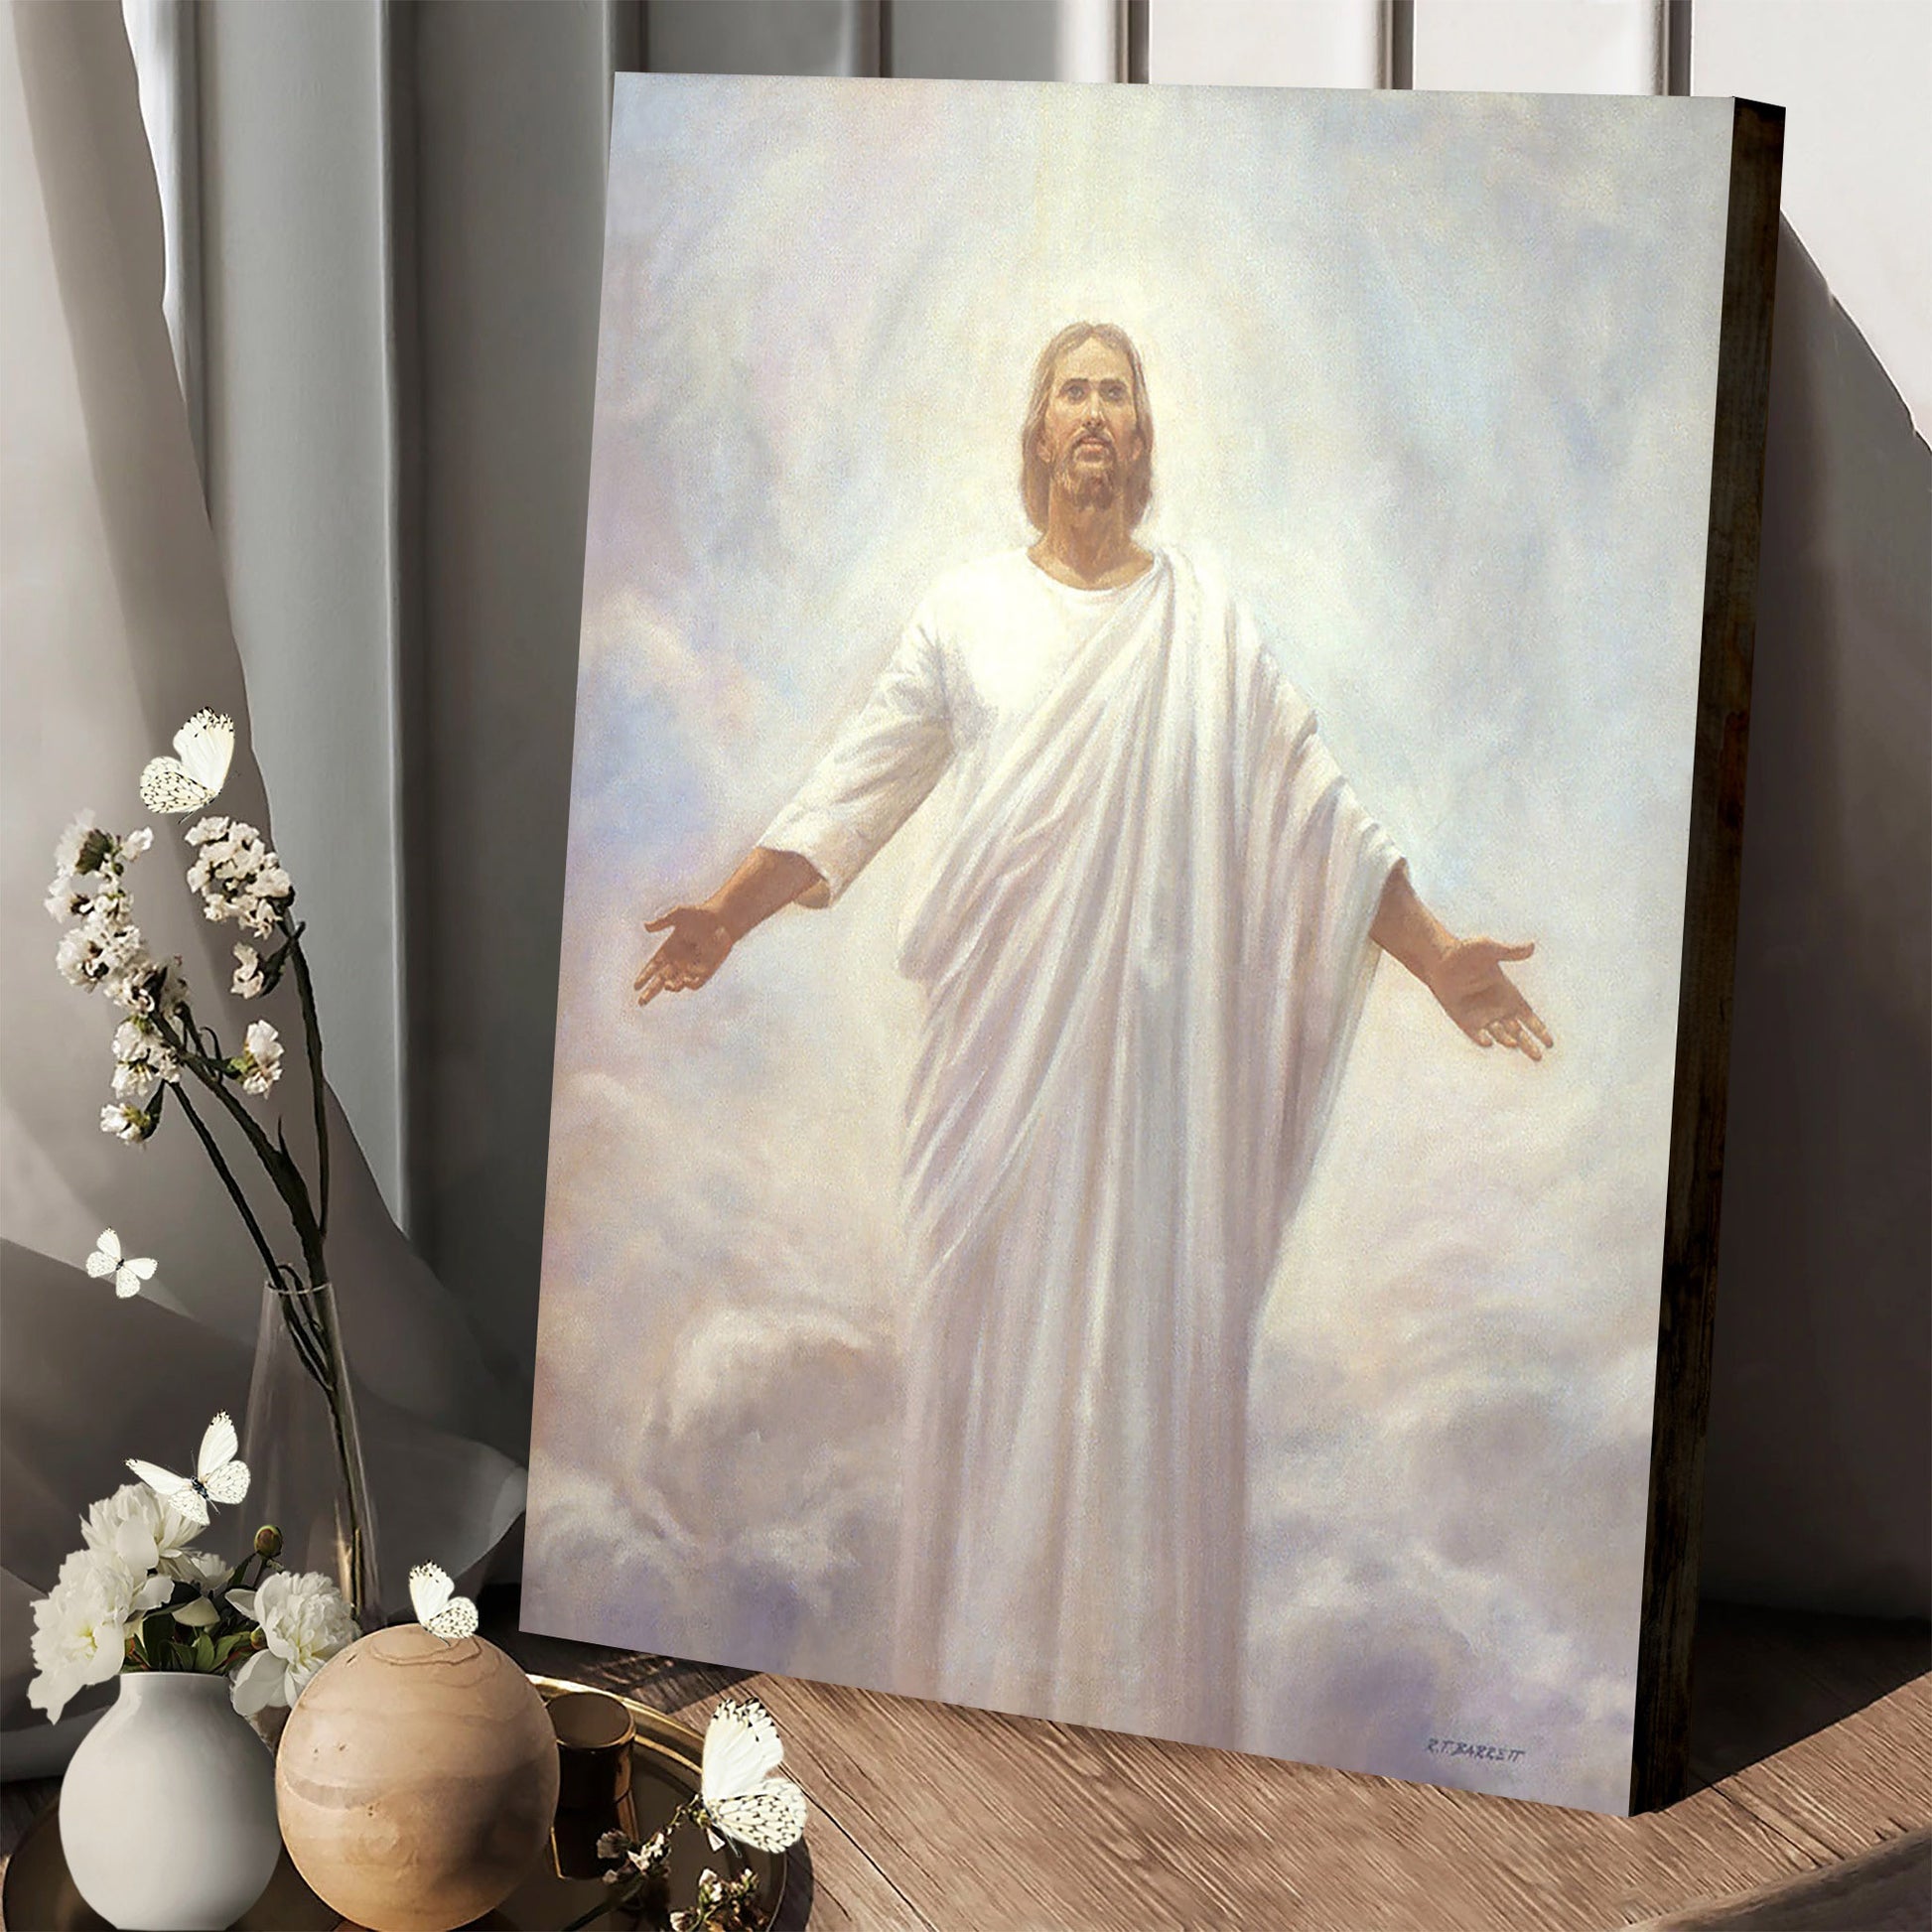 Resurrected Christ Canvas Picture - Jesus Christ Canvas Art - Christian Wall Canvas